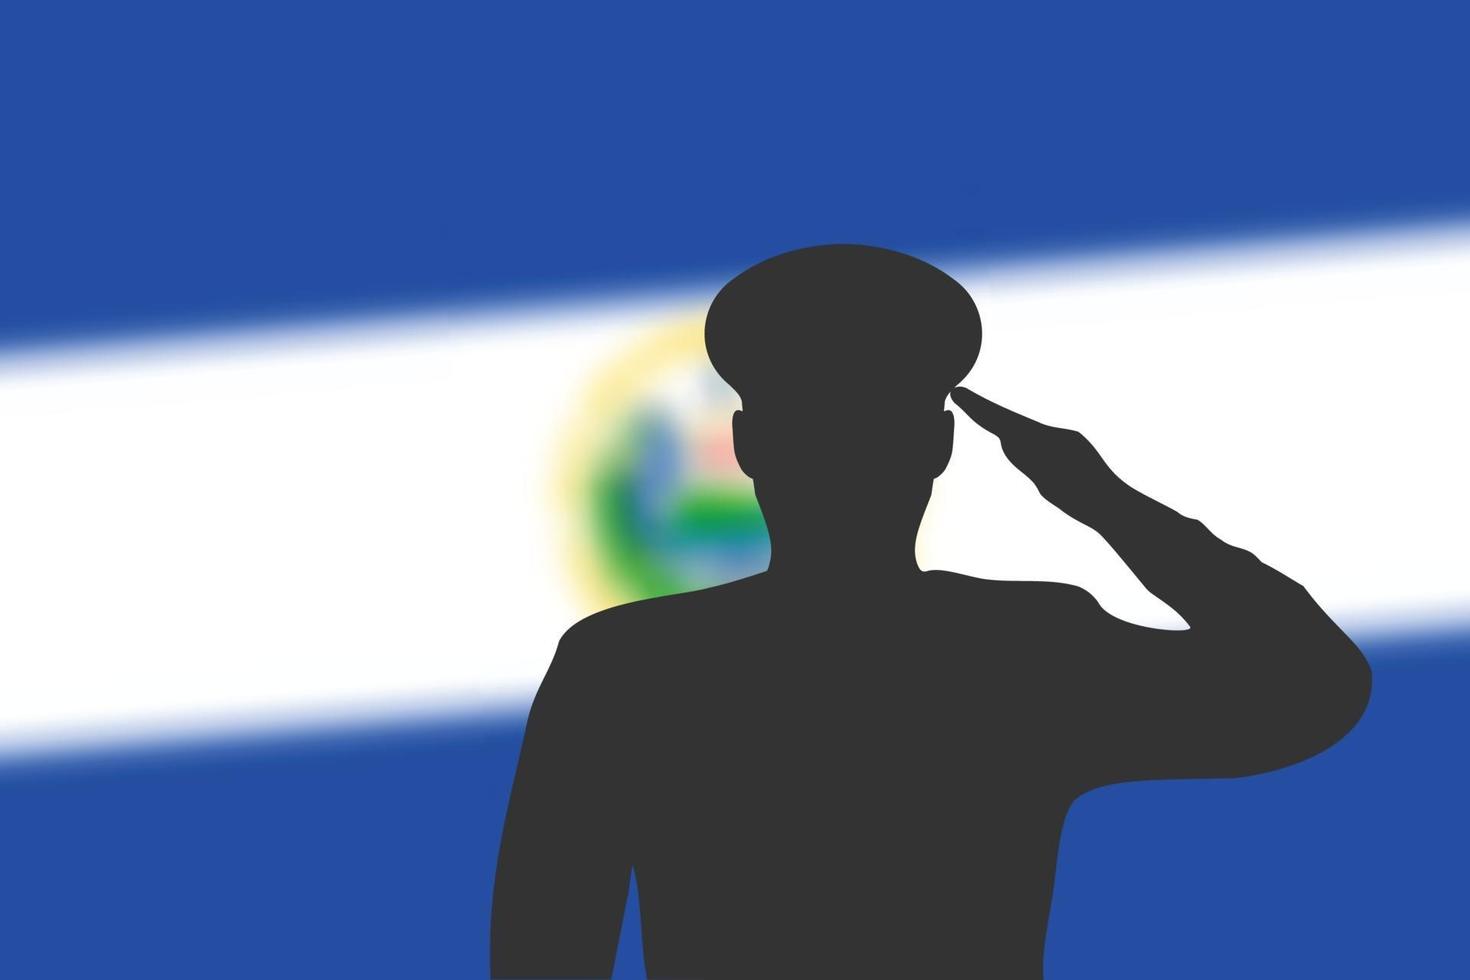 Solder silhouette on blur background with El Salvador flag. vector